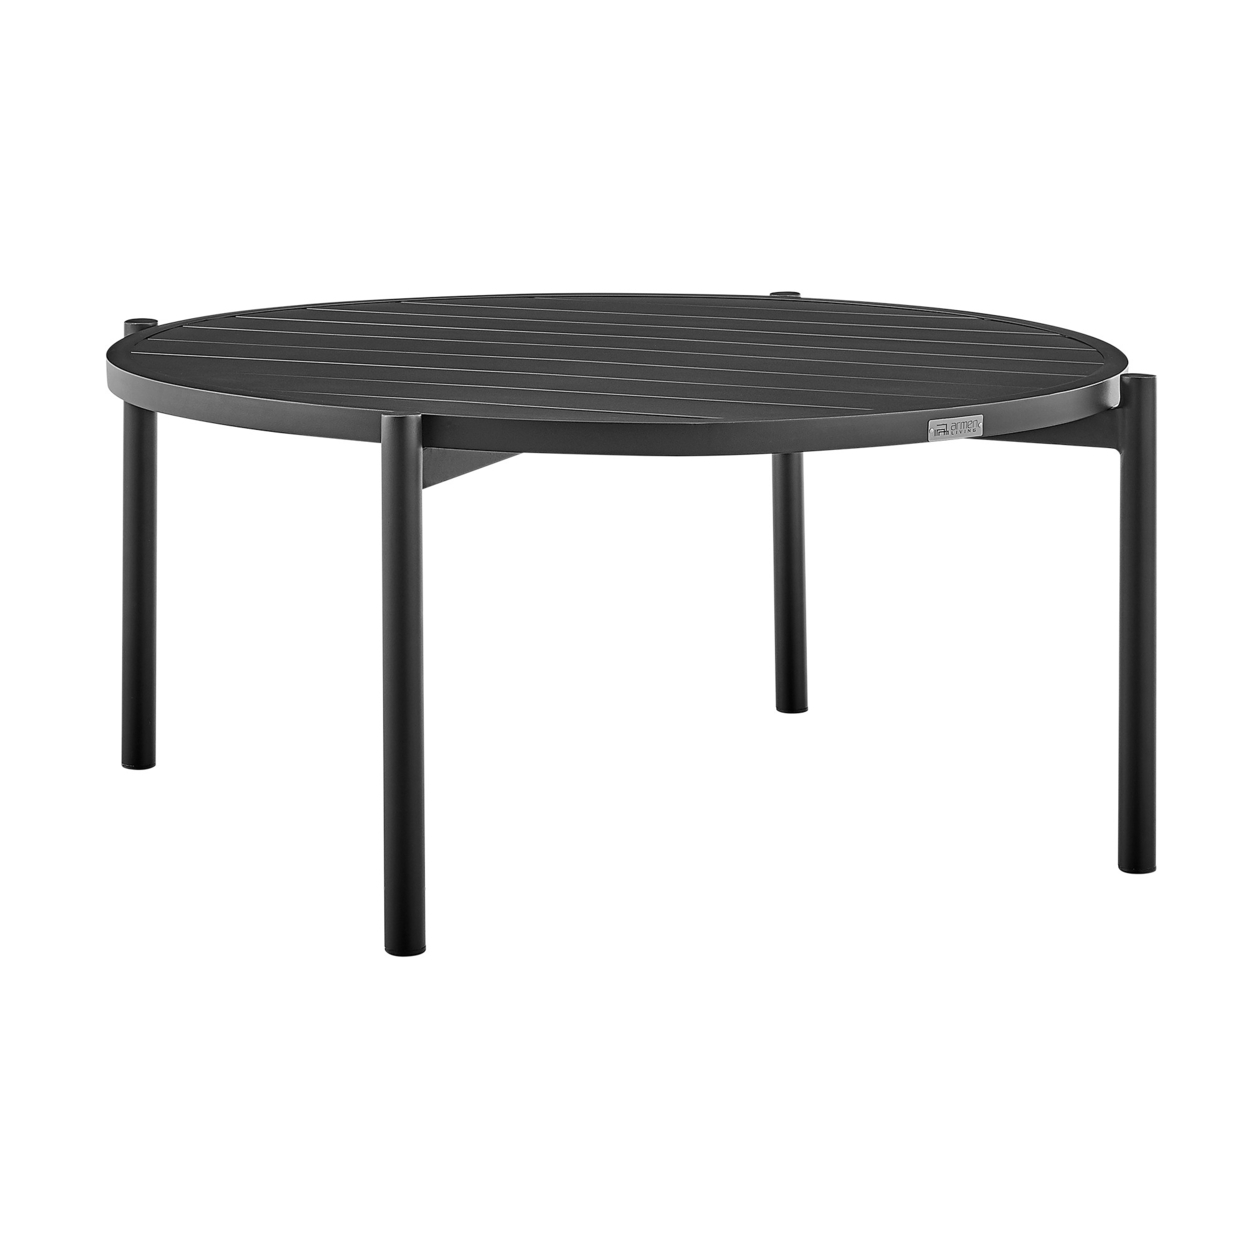 42 Inch Round Patio Coffee Table, Aluminum Frame, Slatted Surface, Black- Saltoro Sherpi